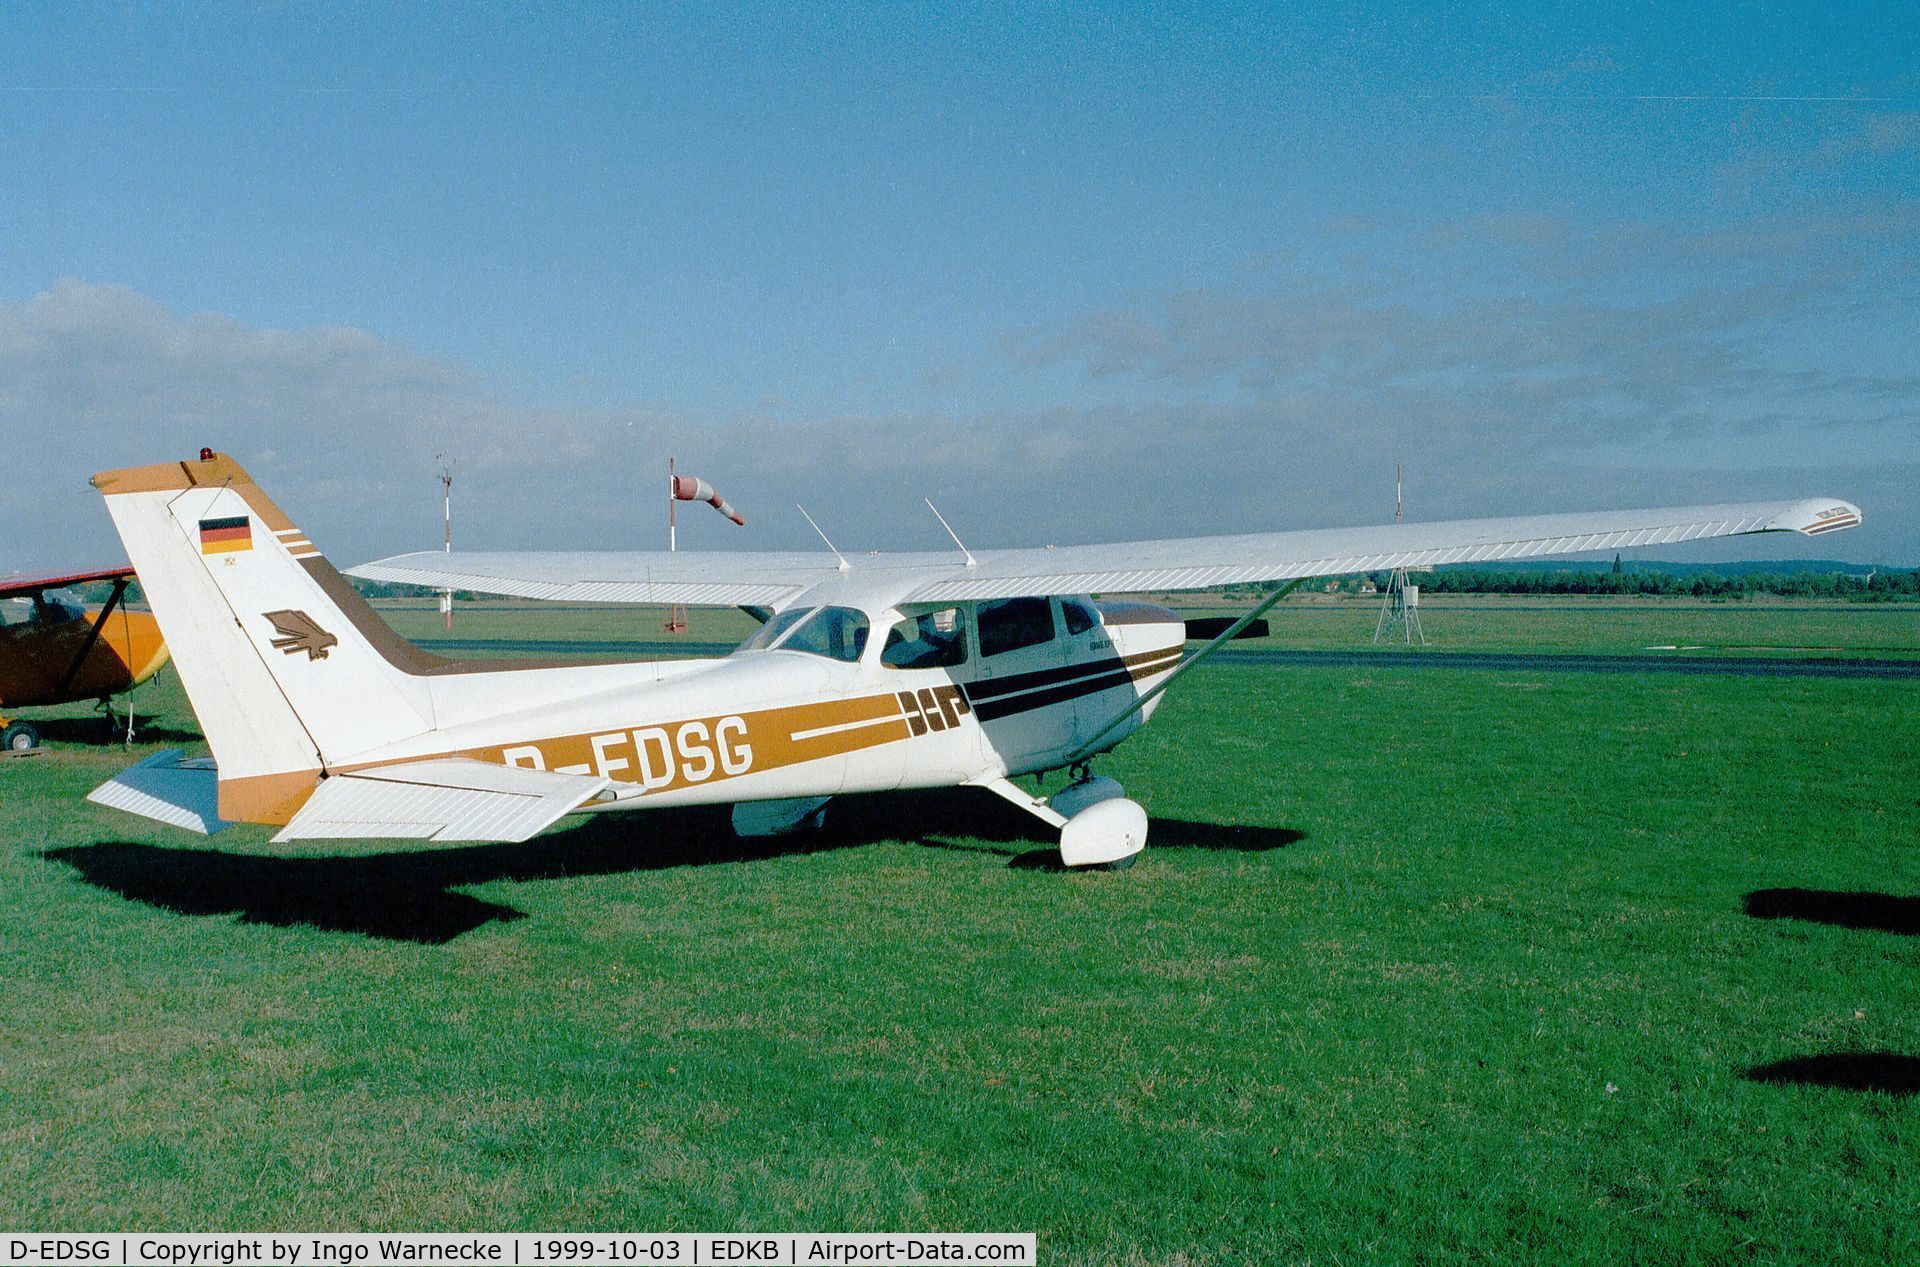 D-EDSG, Reims FR172K Hawk XP II C/N 0665, Cessna (Reims) FR172K Hawk XP II at Bonn-Hangelar airfield